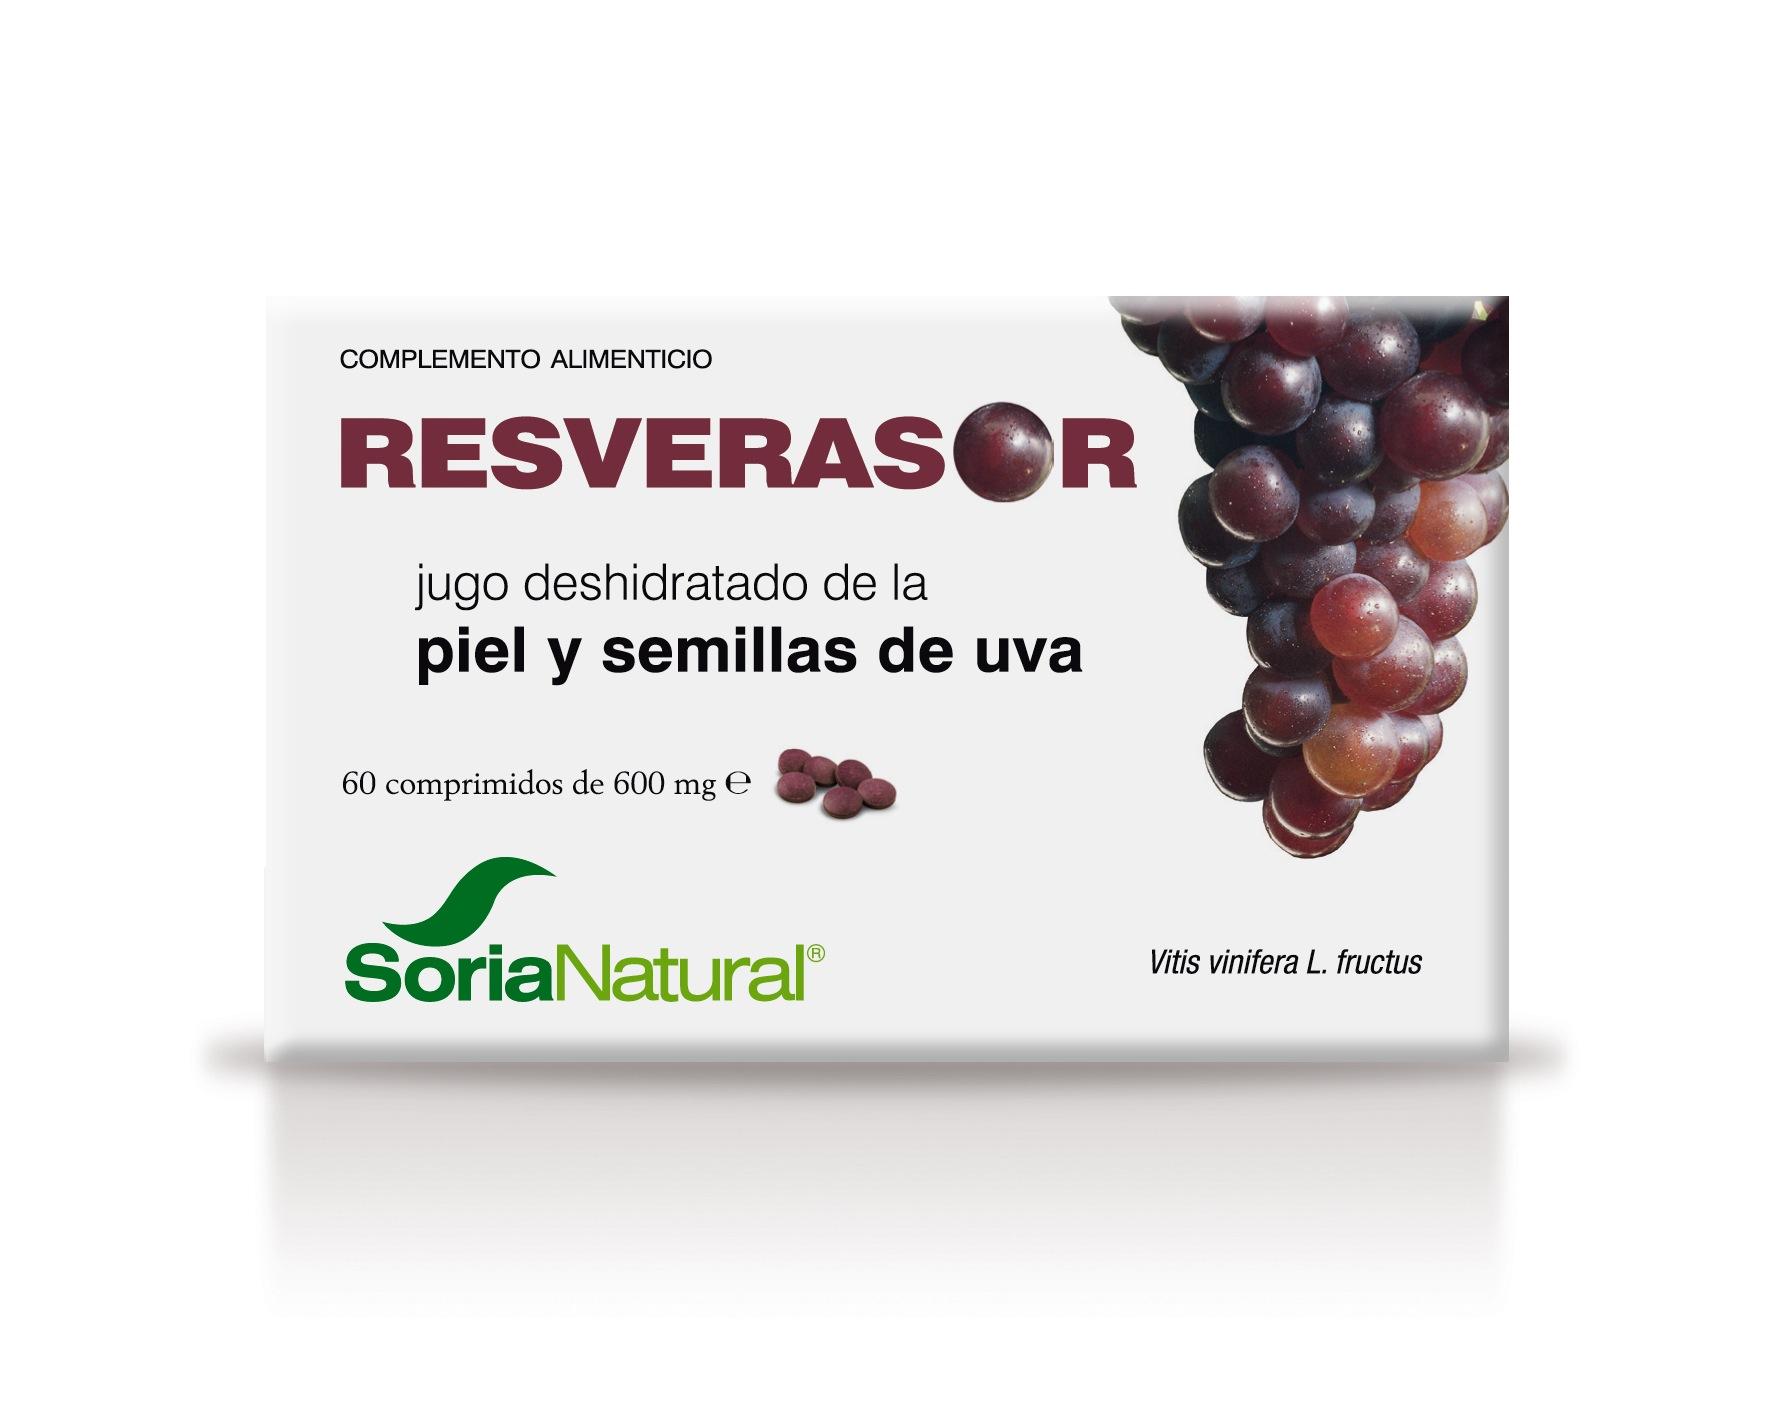 resverasor-comprimidos-soria-natural-frontal.jpg